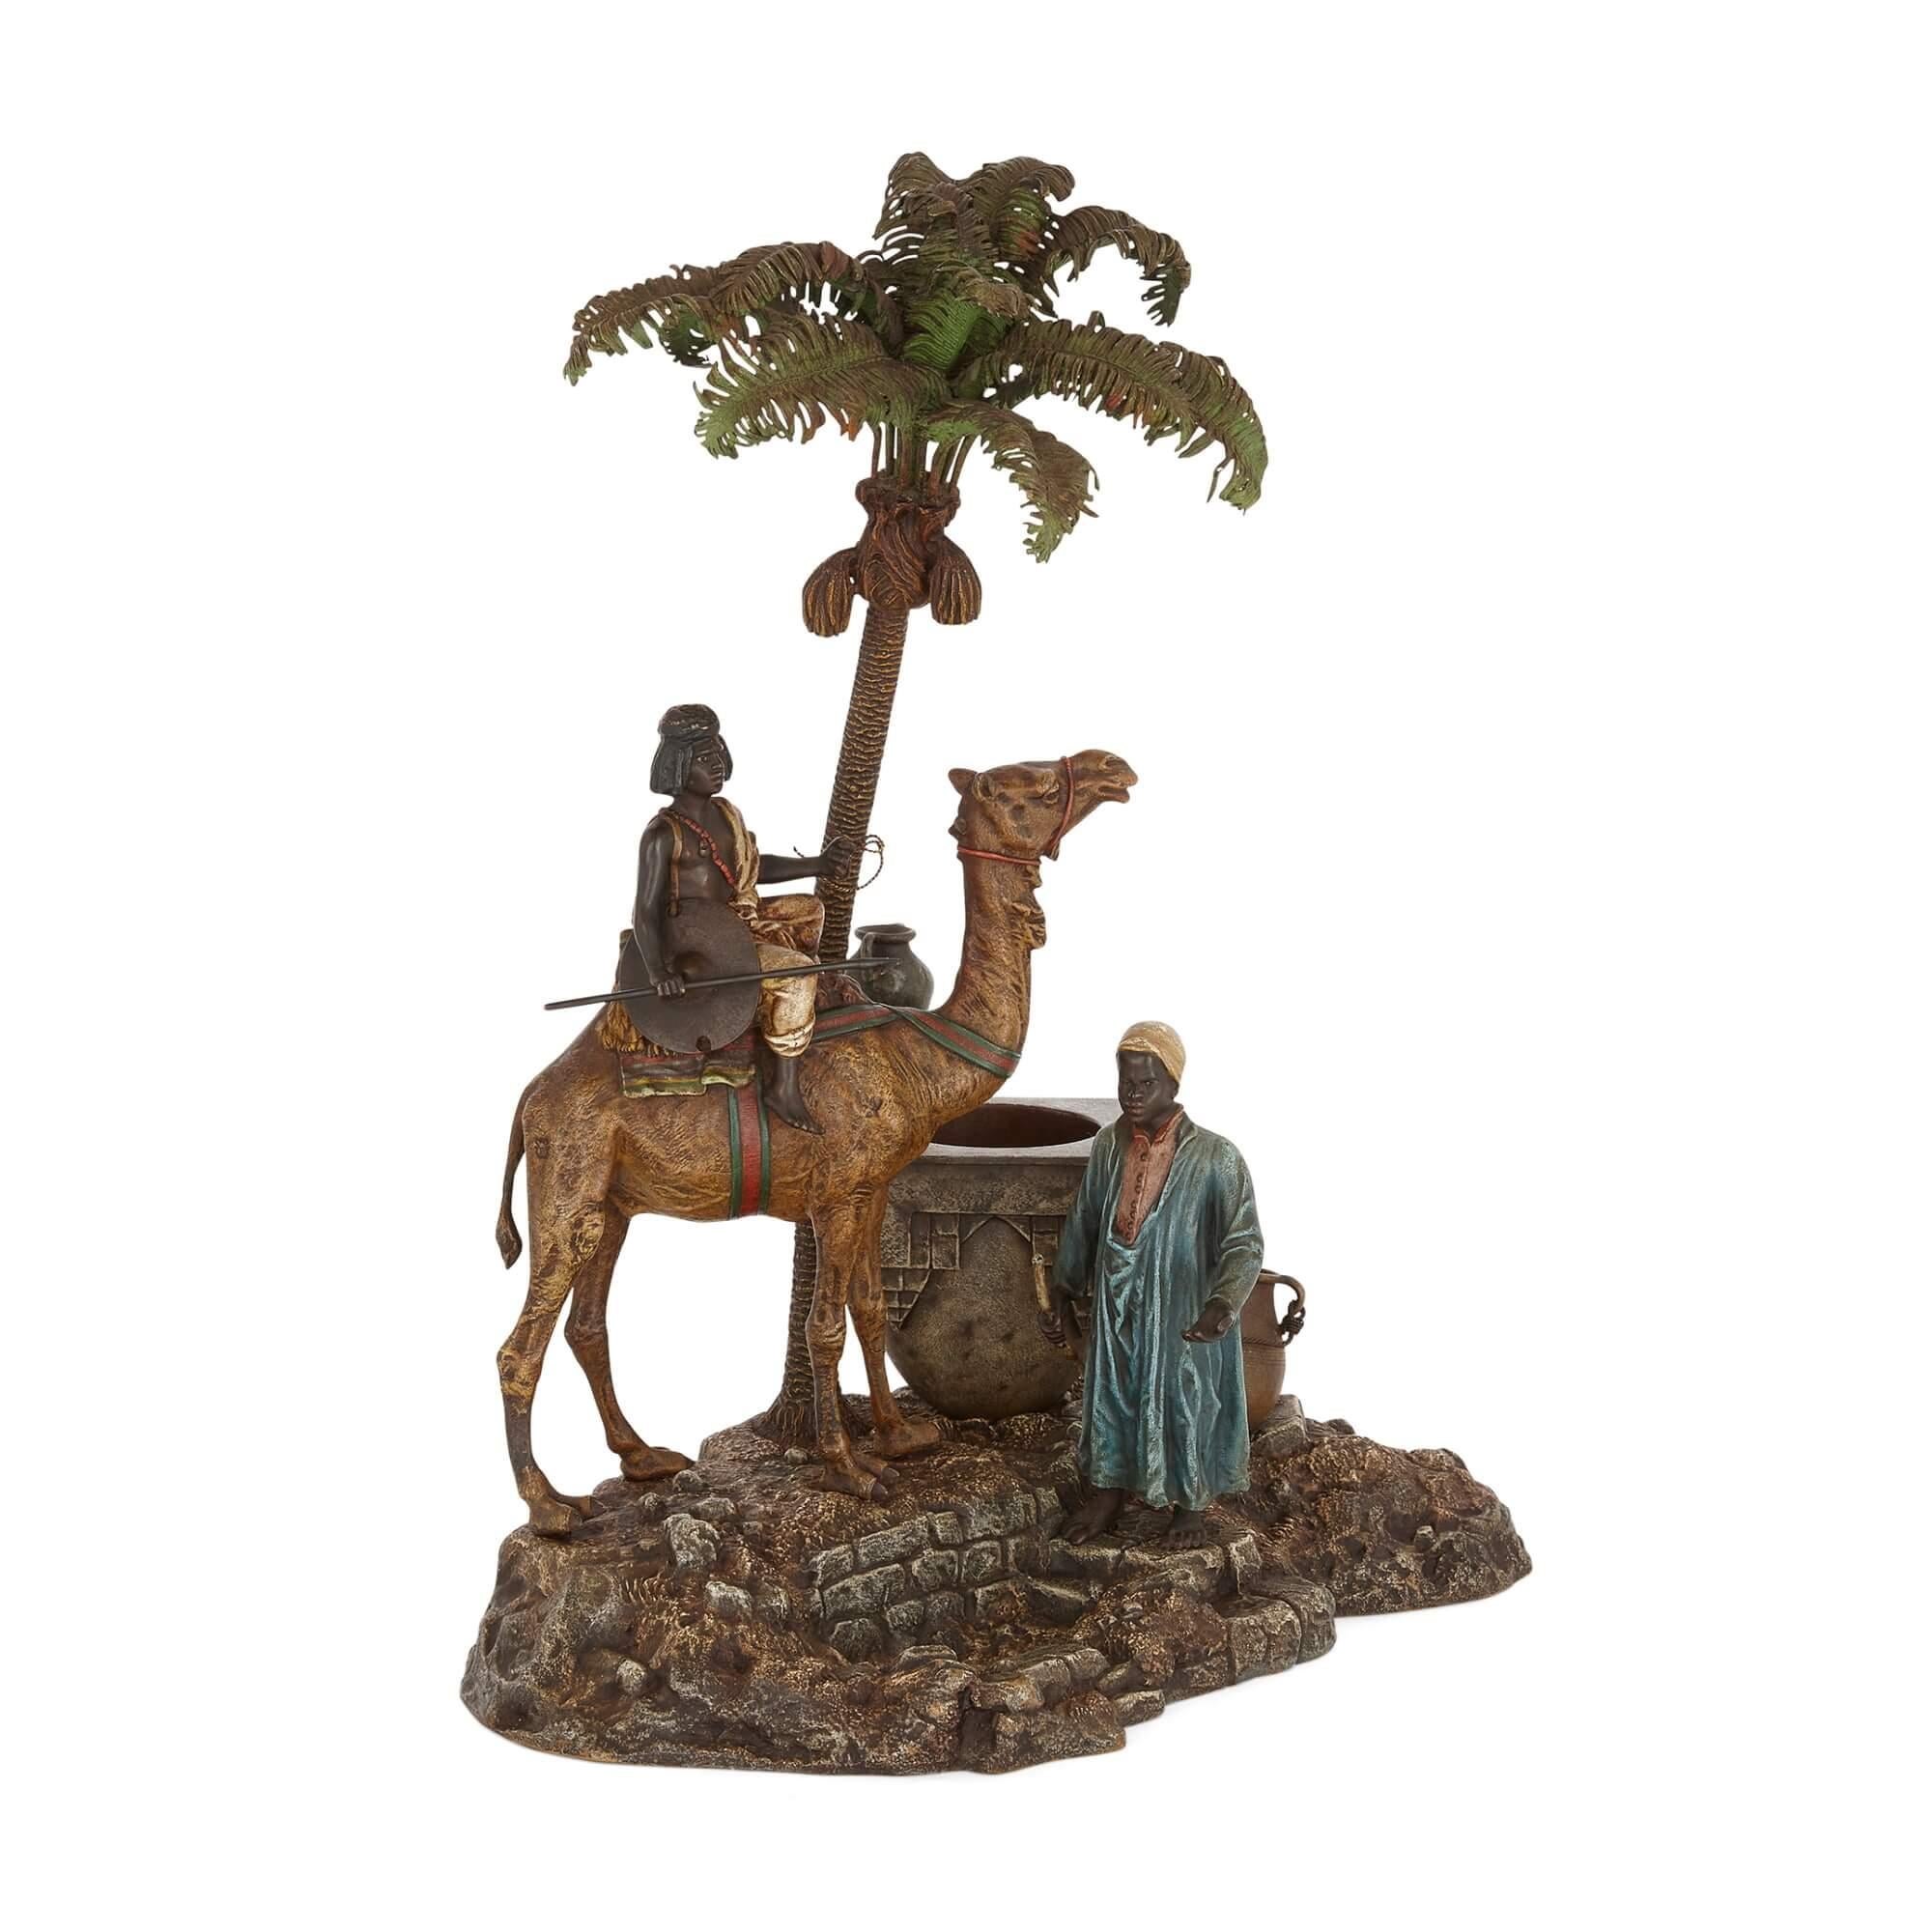 Antique Viennese cold-painted bronze sculpture with a camel by Bergman 
Austrian, c. 1910
Height 39cm, width 31cm, depth 20cm 

Franz Xaver Bergman (1861-1936) is the artist behind this unusual sculptural desk piece. 

A camel stands majestically